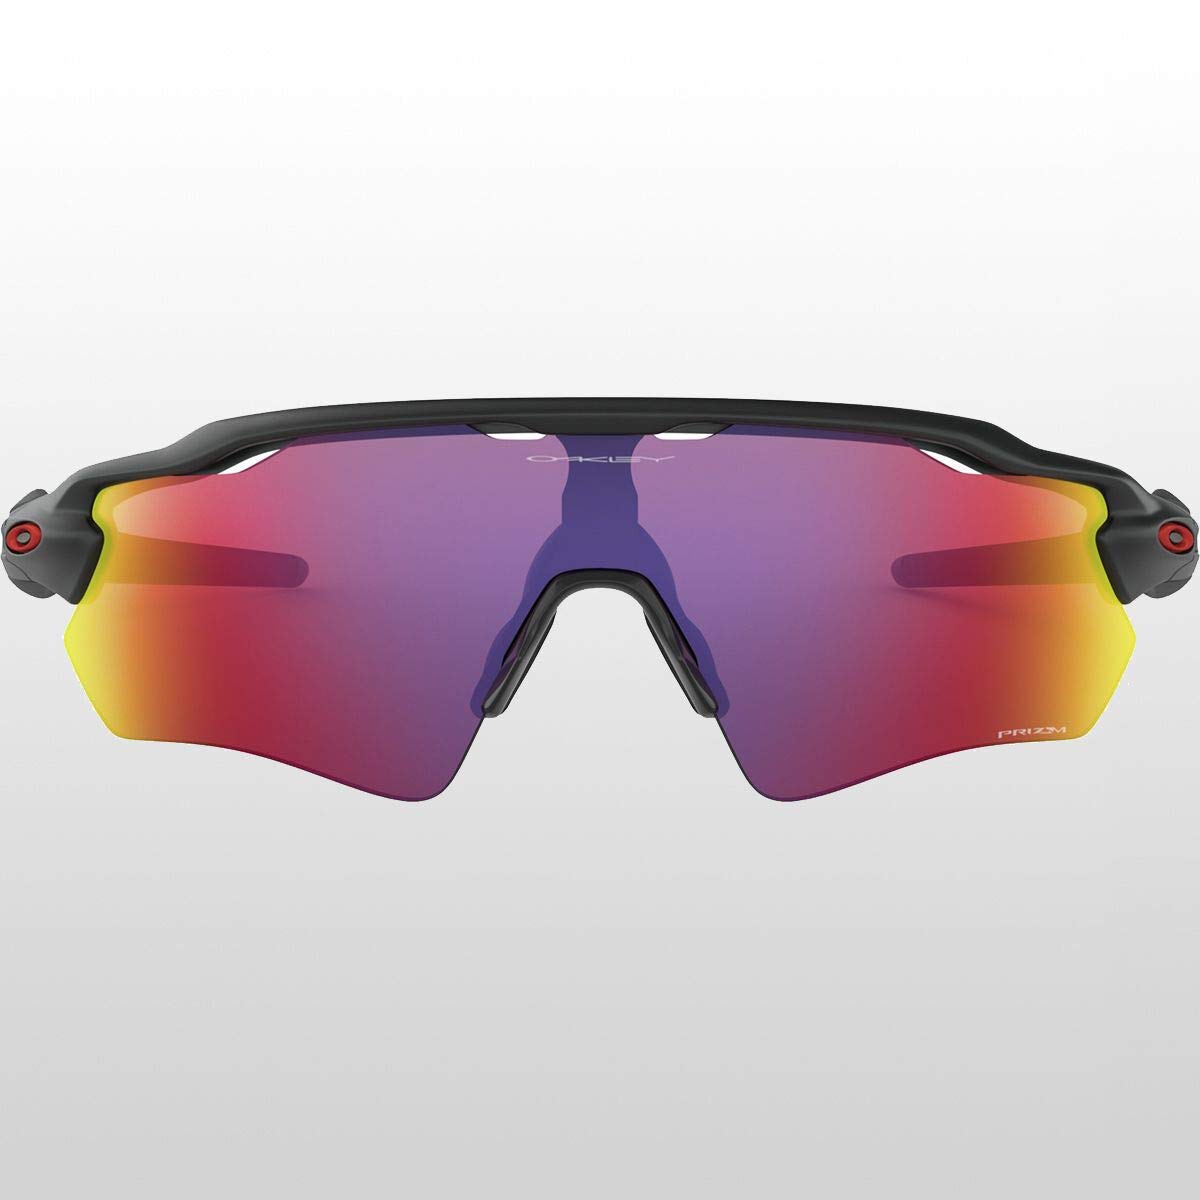 Oakley Men UV Protected Red Lens Rectangle Sunglasses - 0OO9208